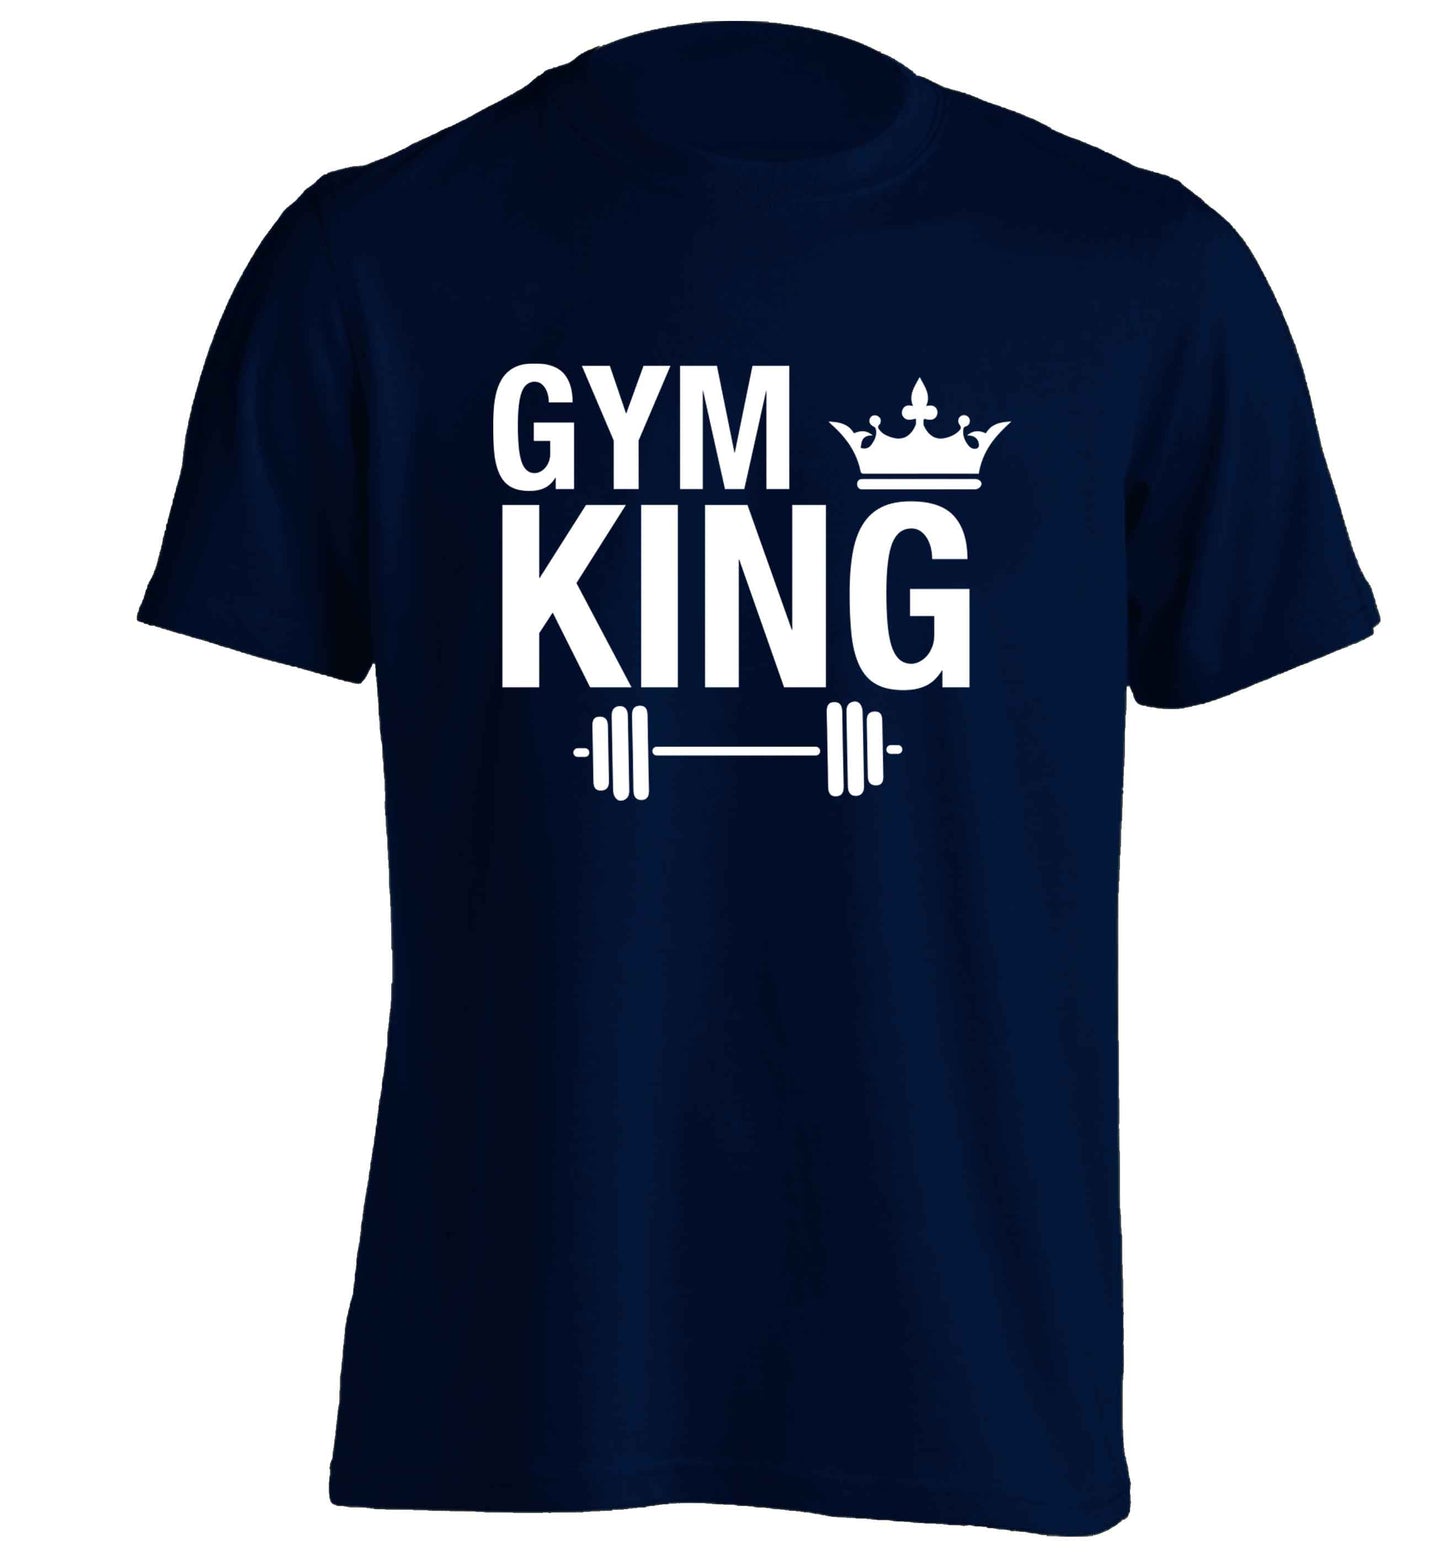 Gym king adults unisex navy Tshirt 2XL